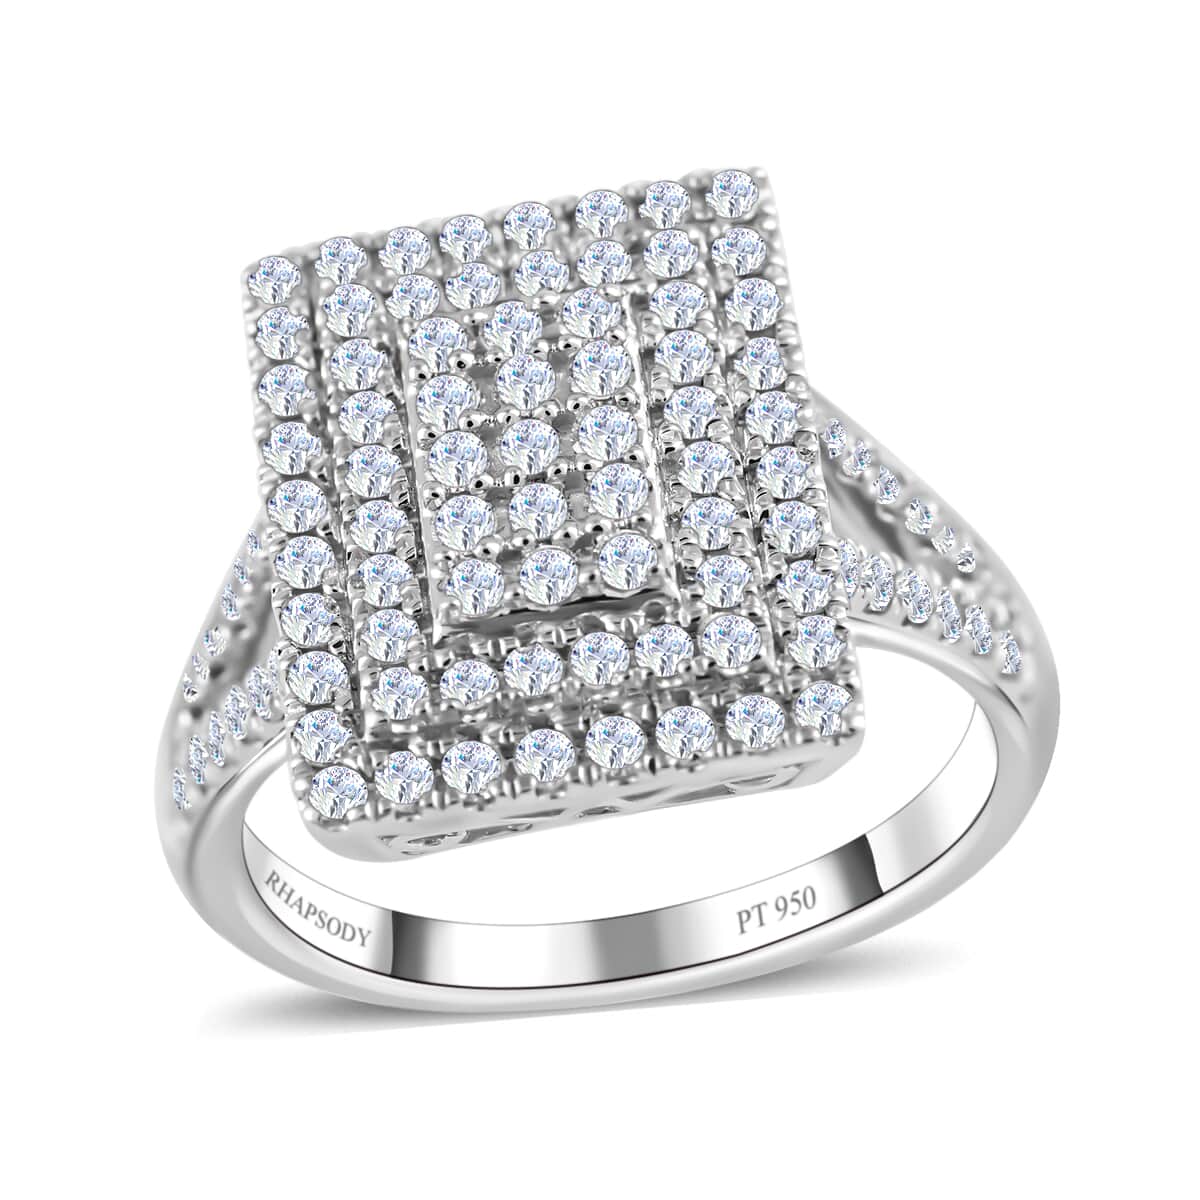 Rhapsody 950 Platinum IGI Certified E-F VS Diamond Ring (Size 9.0) 7.70 Grams 1.00 ctw image number 0